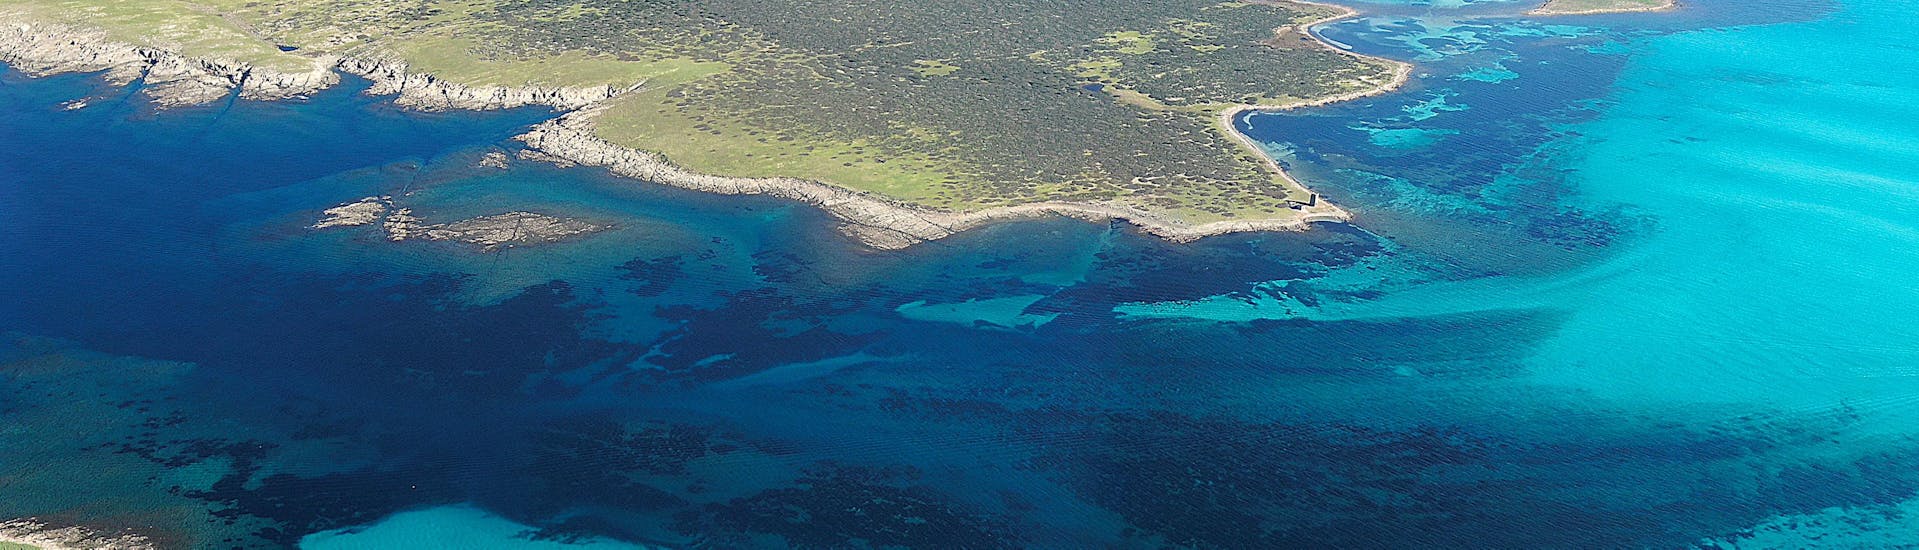 View of La Pelosa island that you can see during a RIB boat trip with Amato Escursioni Asinara.